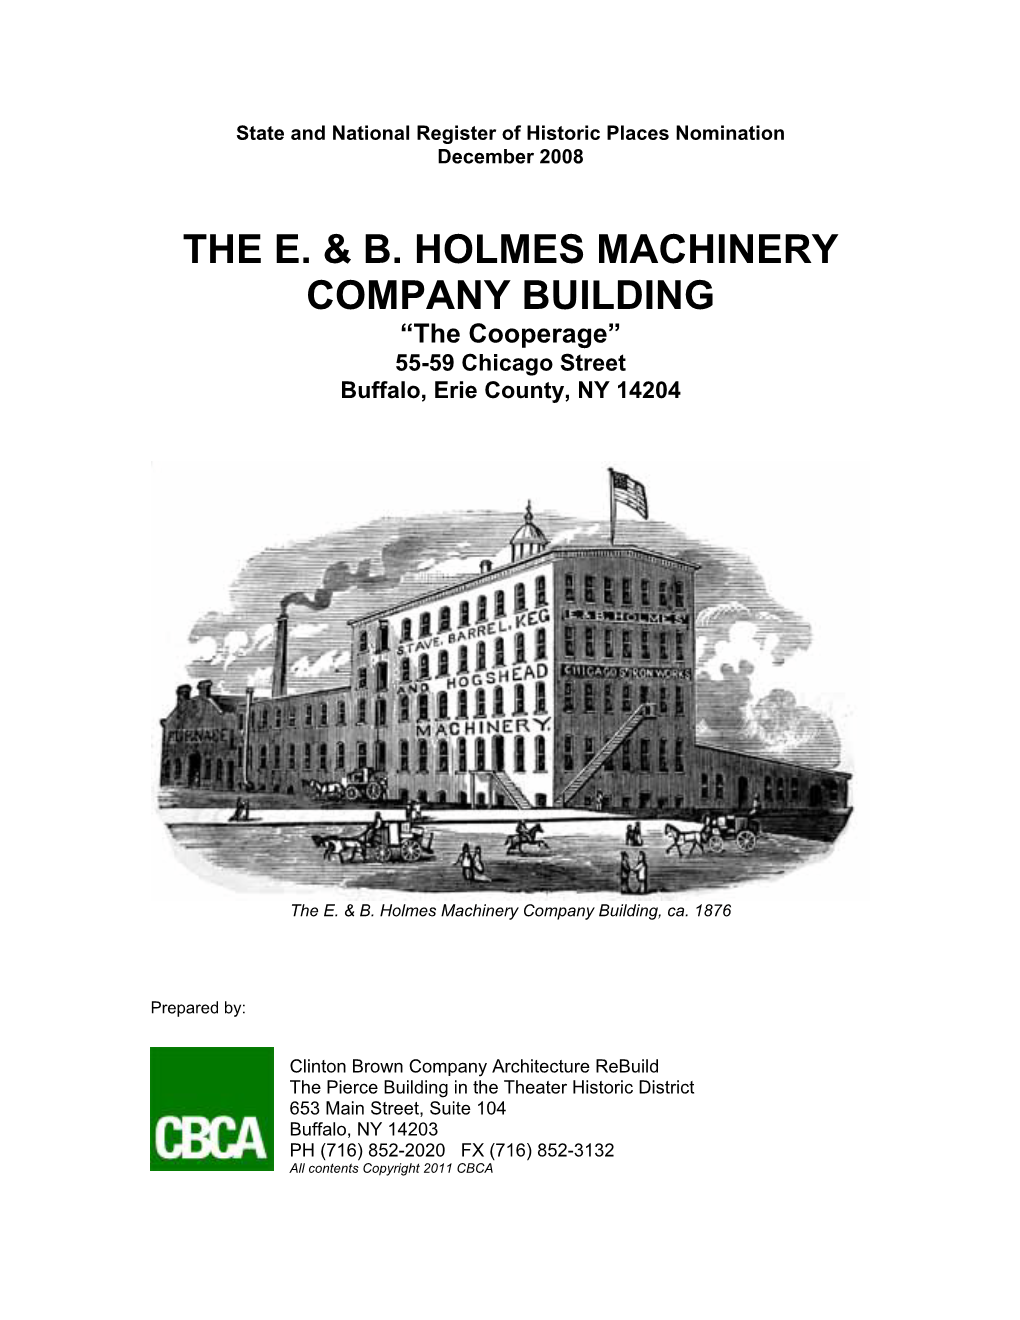 The E. & B. Holmes Machinery Company Building